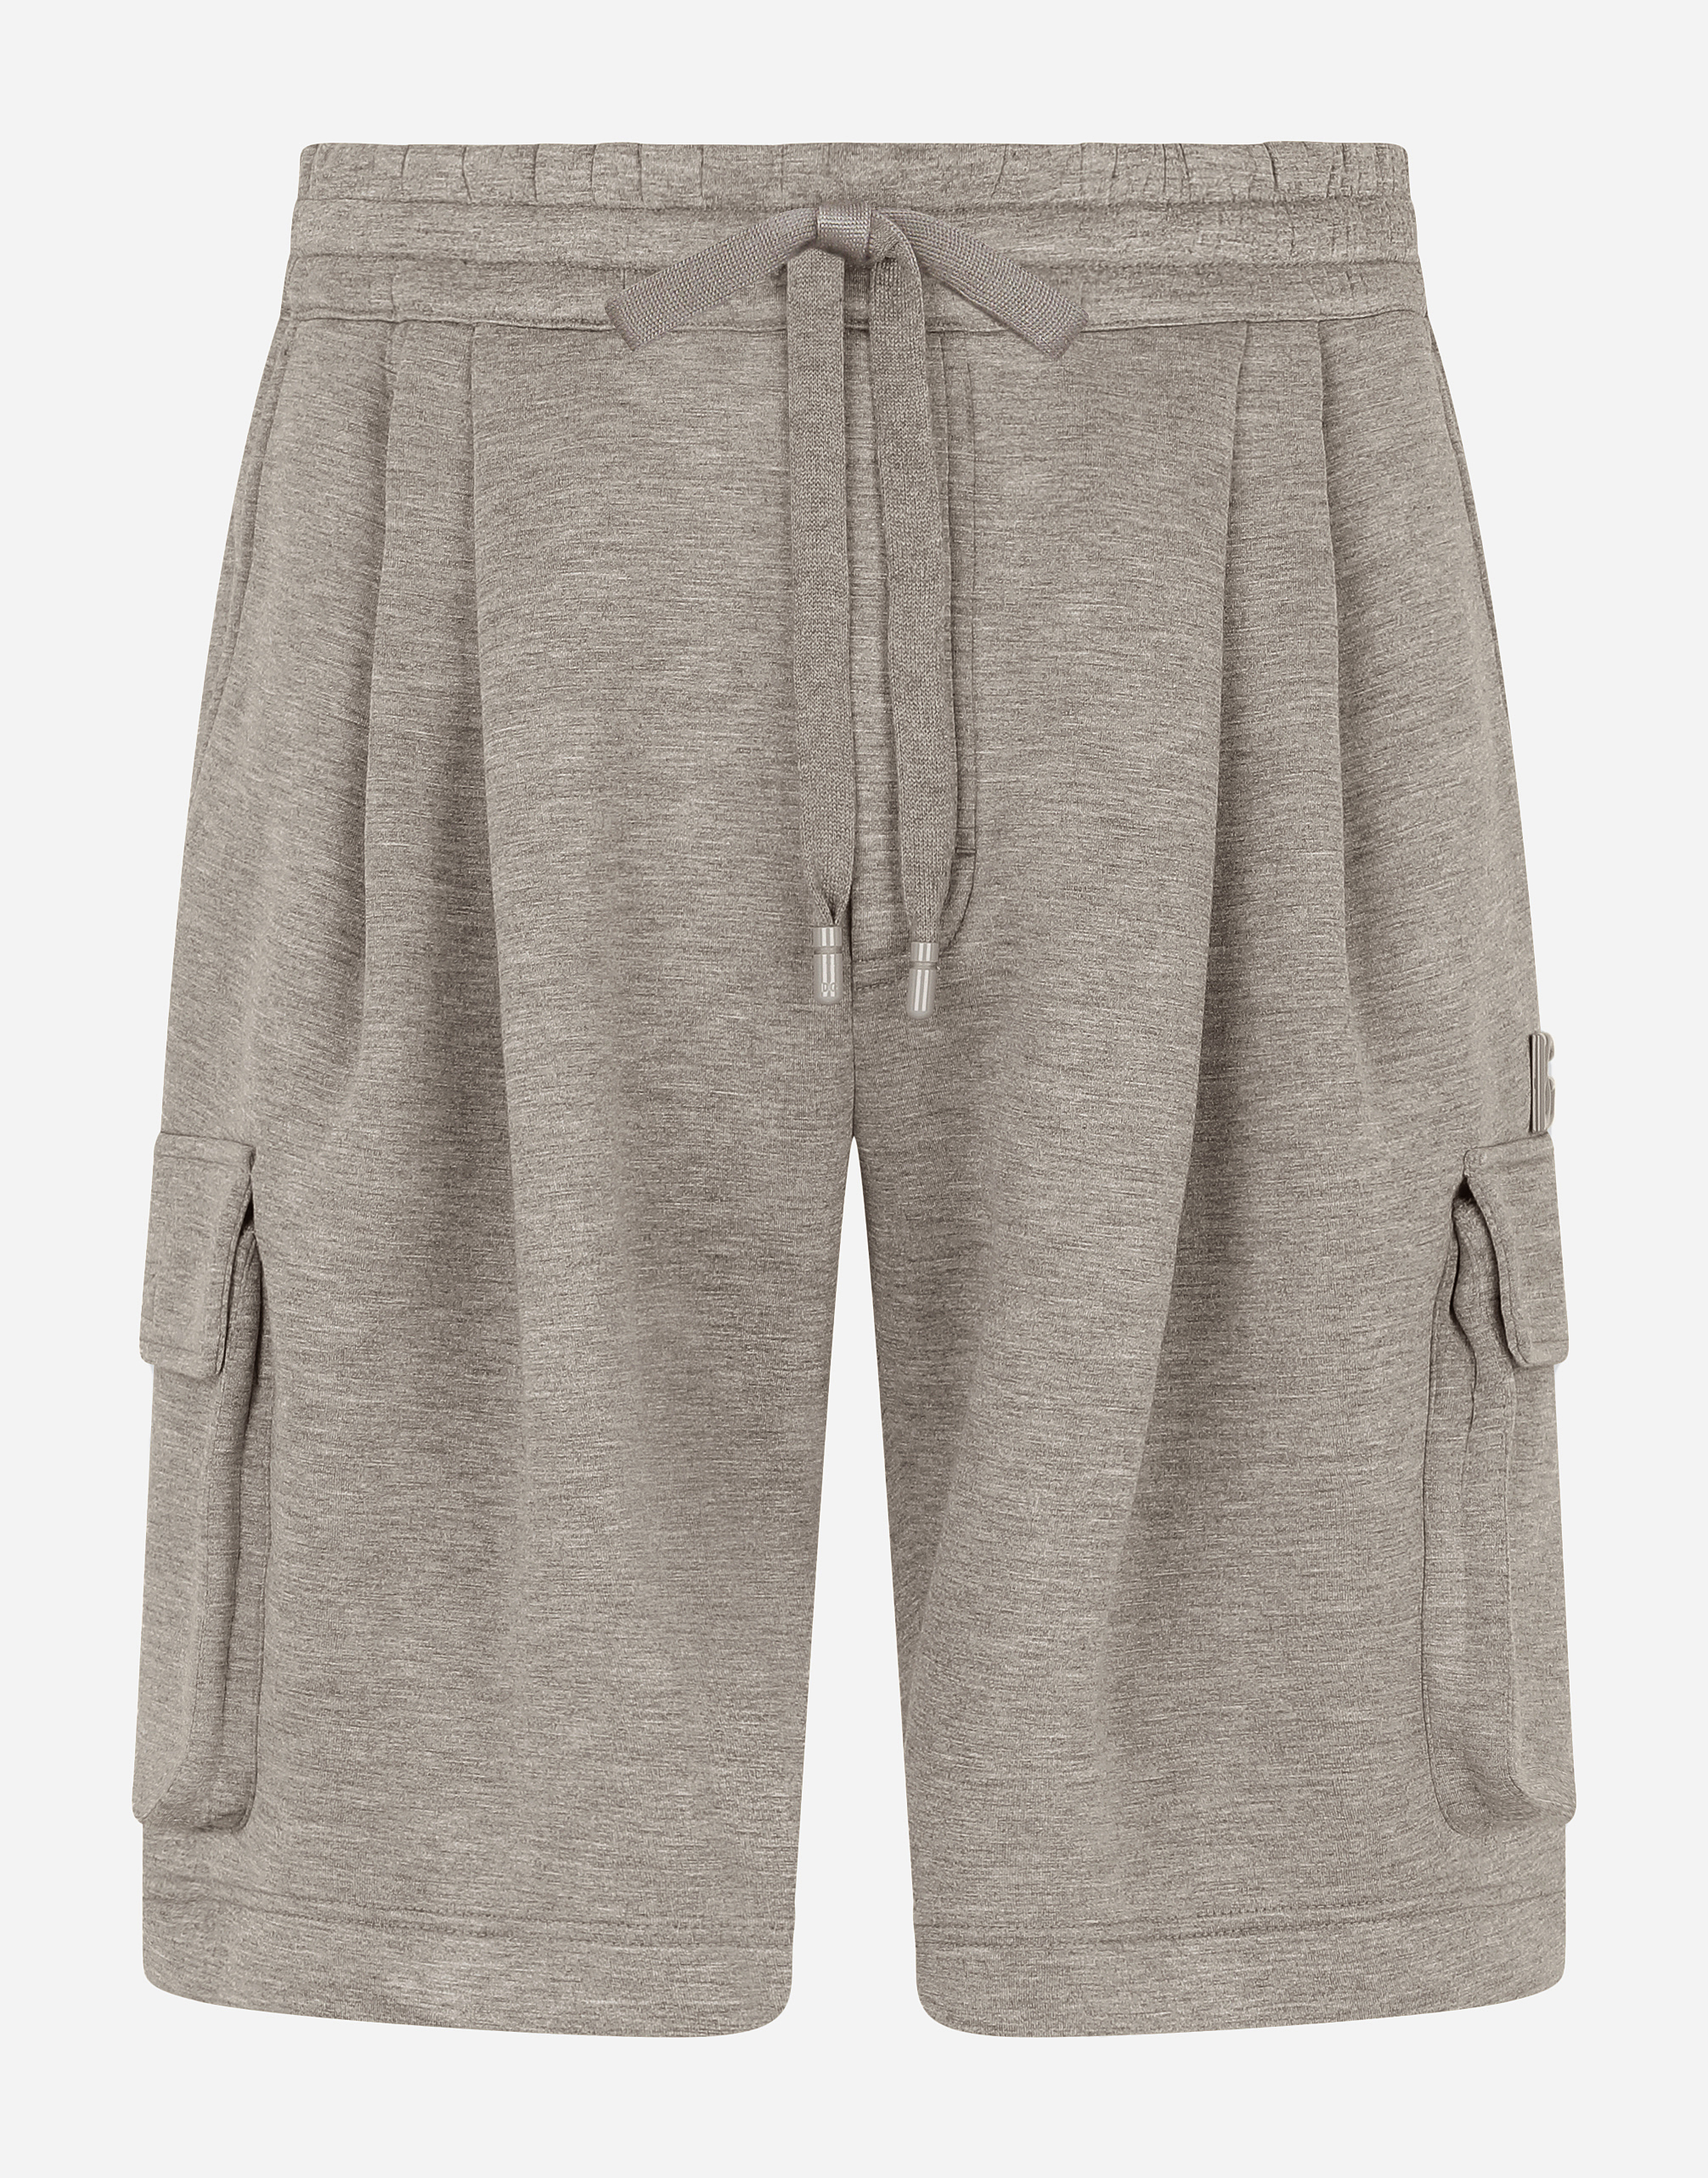 Cargo jogging shorts with DG logo in Grey